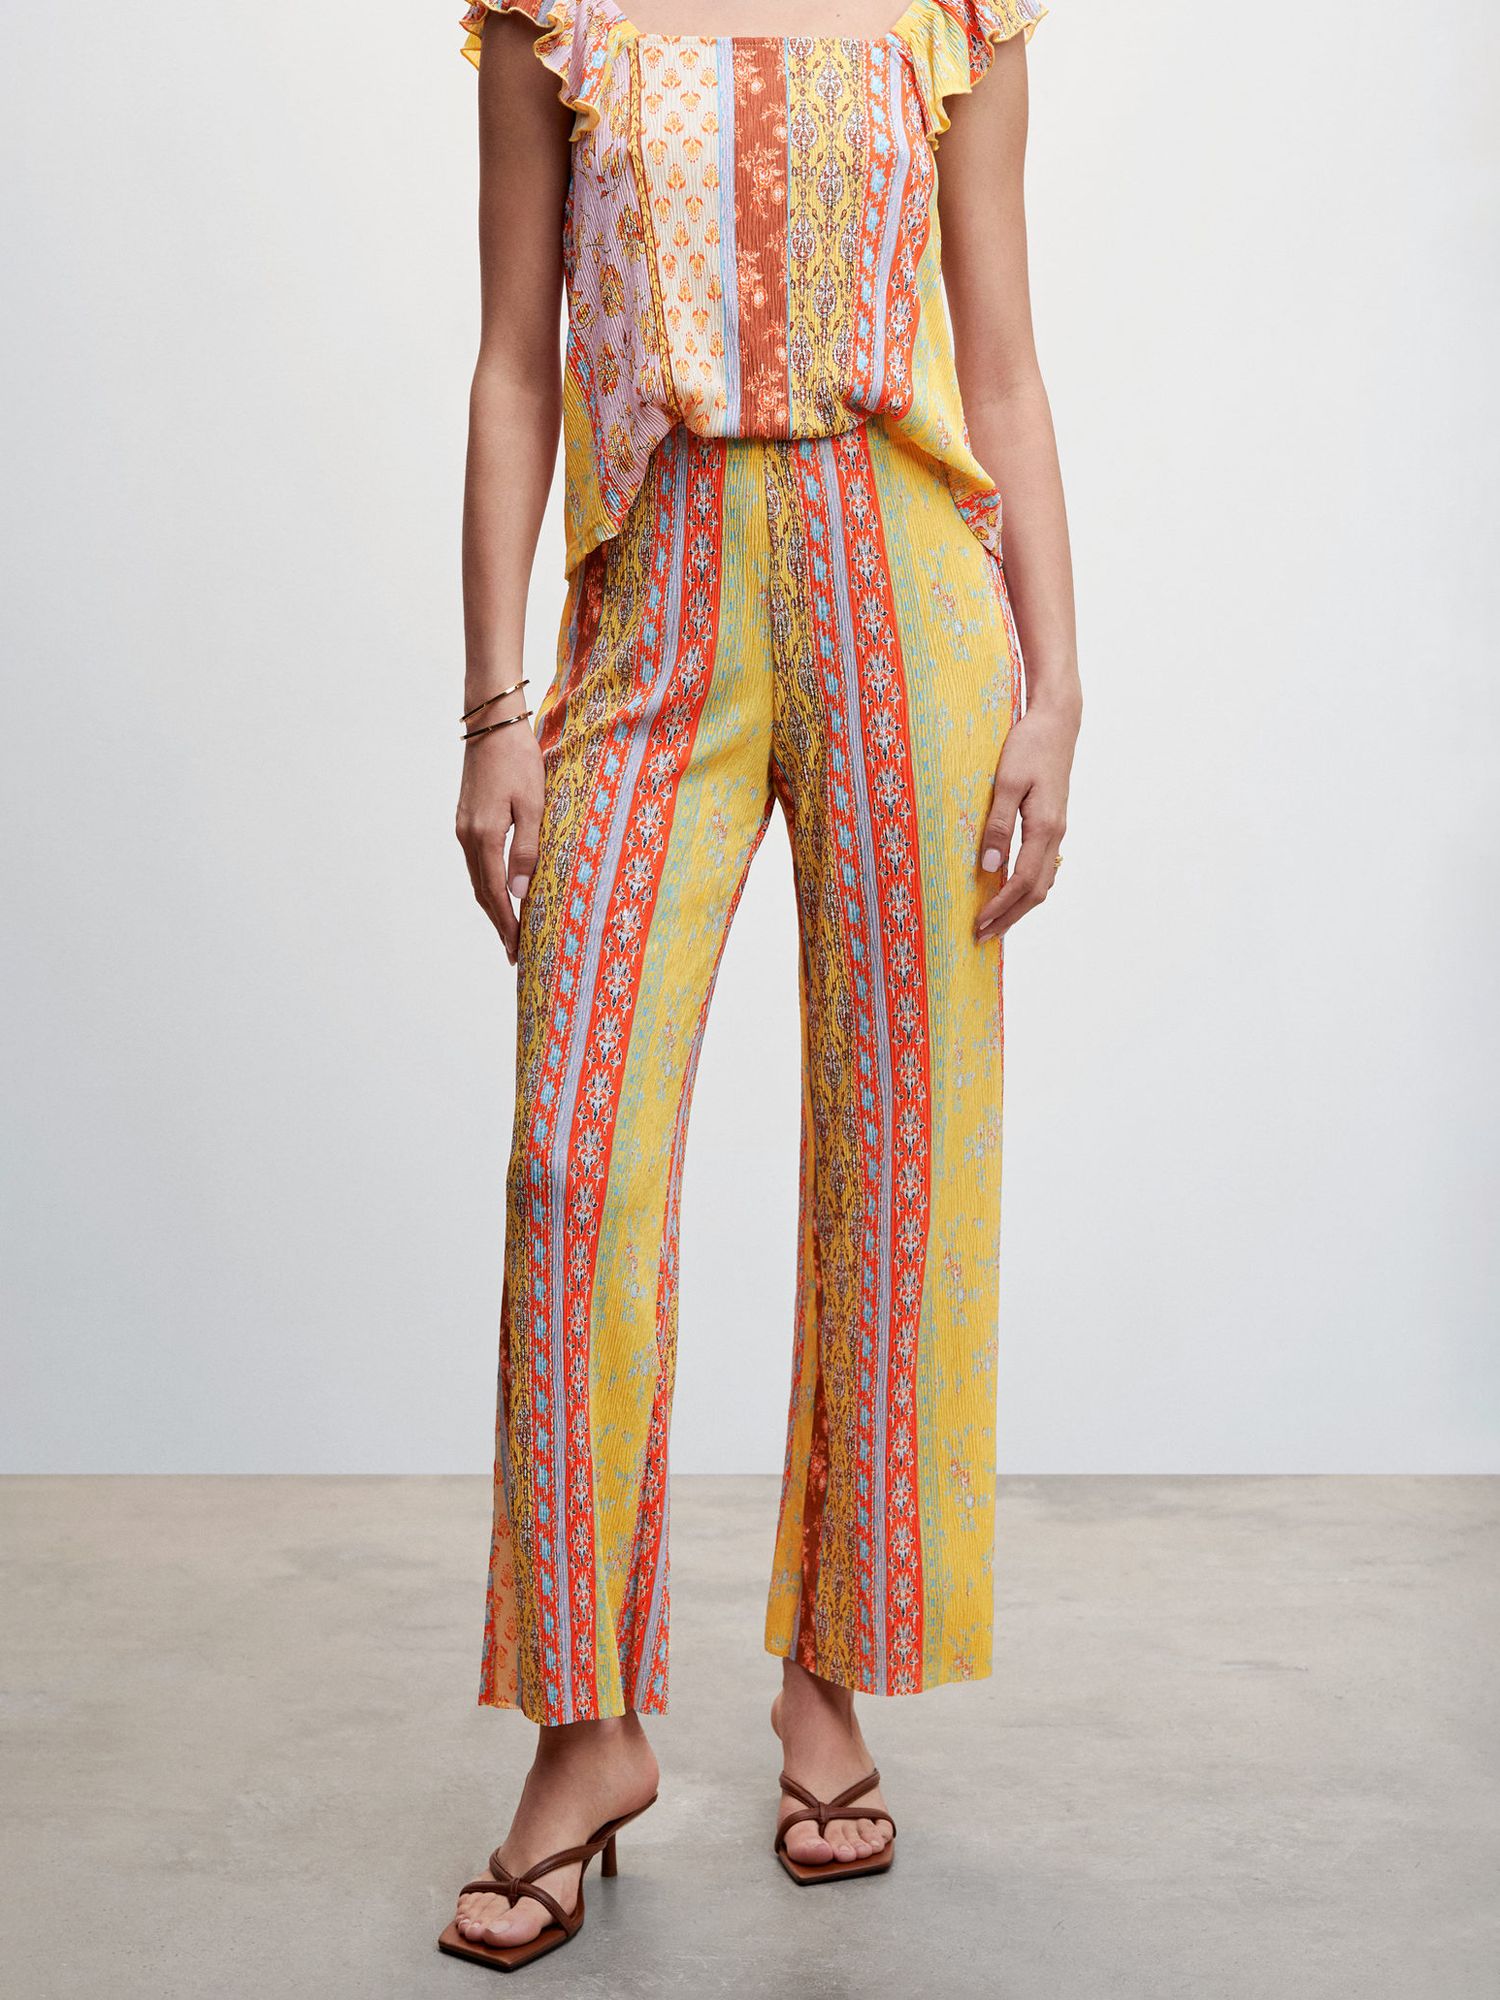 Mango Tarifa Floral Trousers, Yellow/Multi at John Lewis & Partners